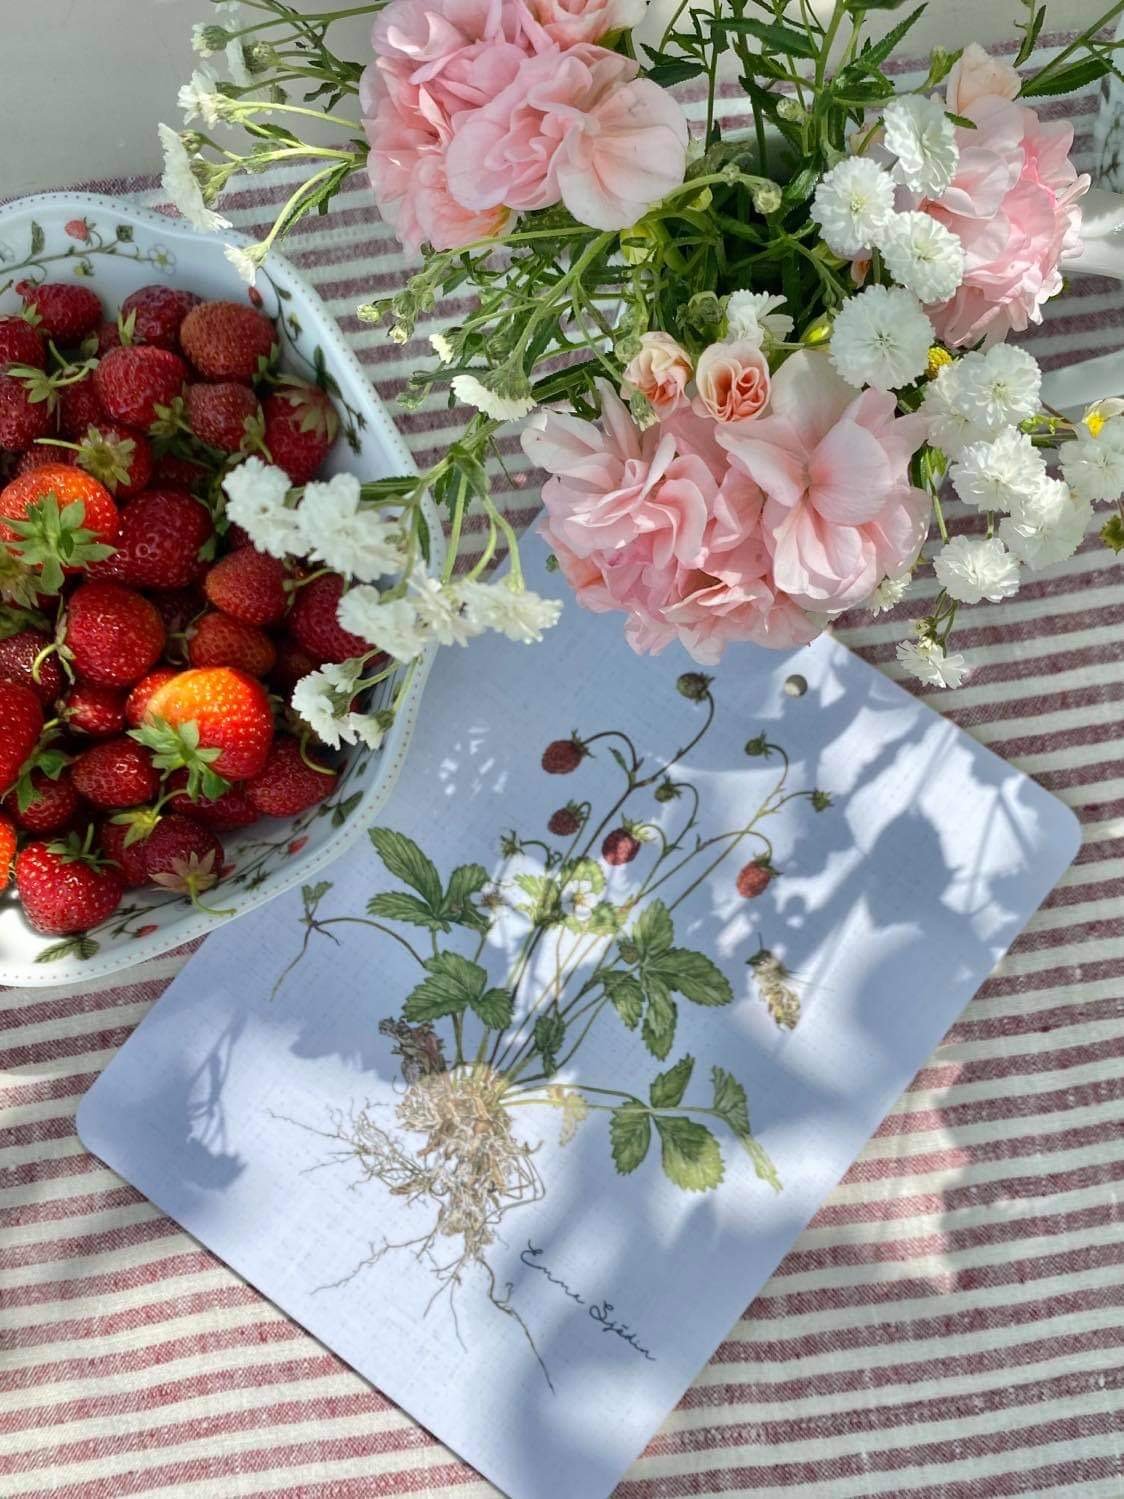 Emma Sjodin Gift Set: Cutting Board and Linen Towel, Strawberry Woodland